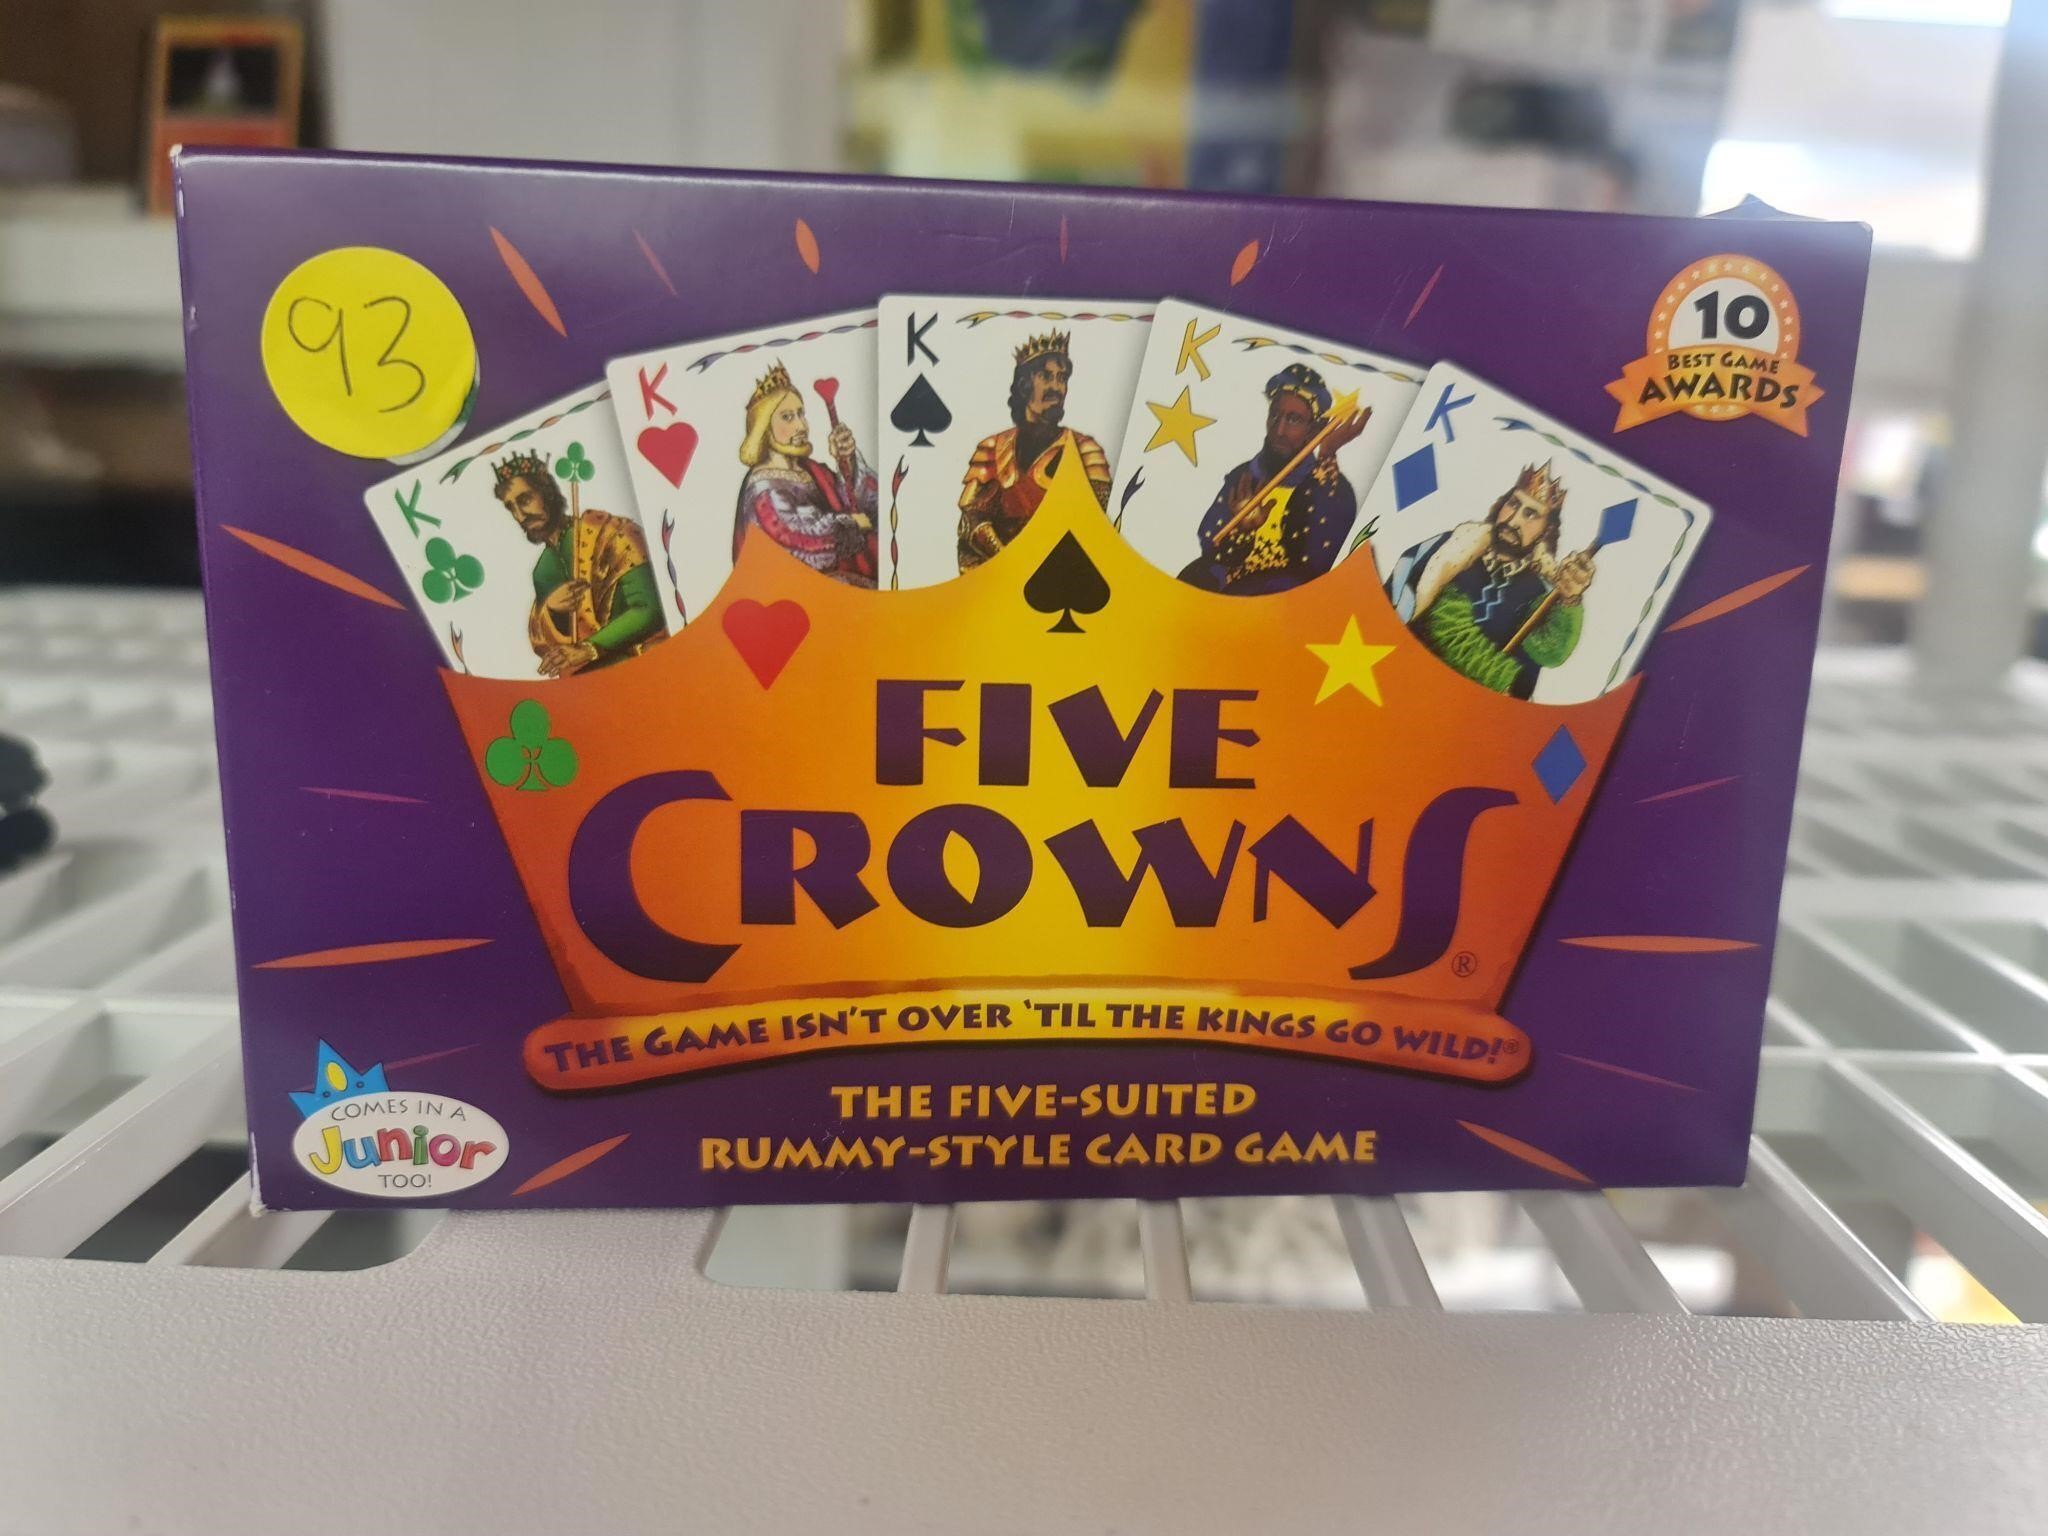 5 crowns